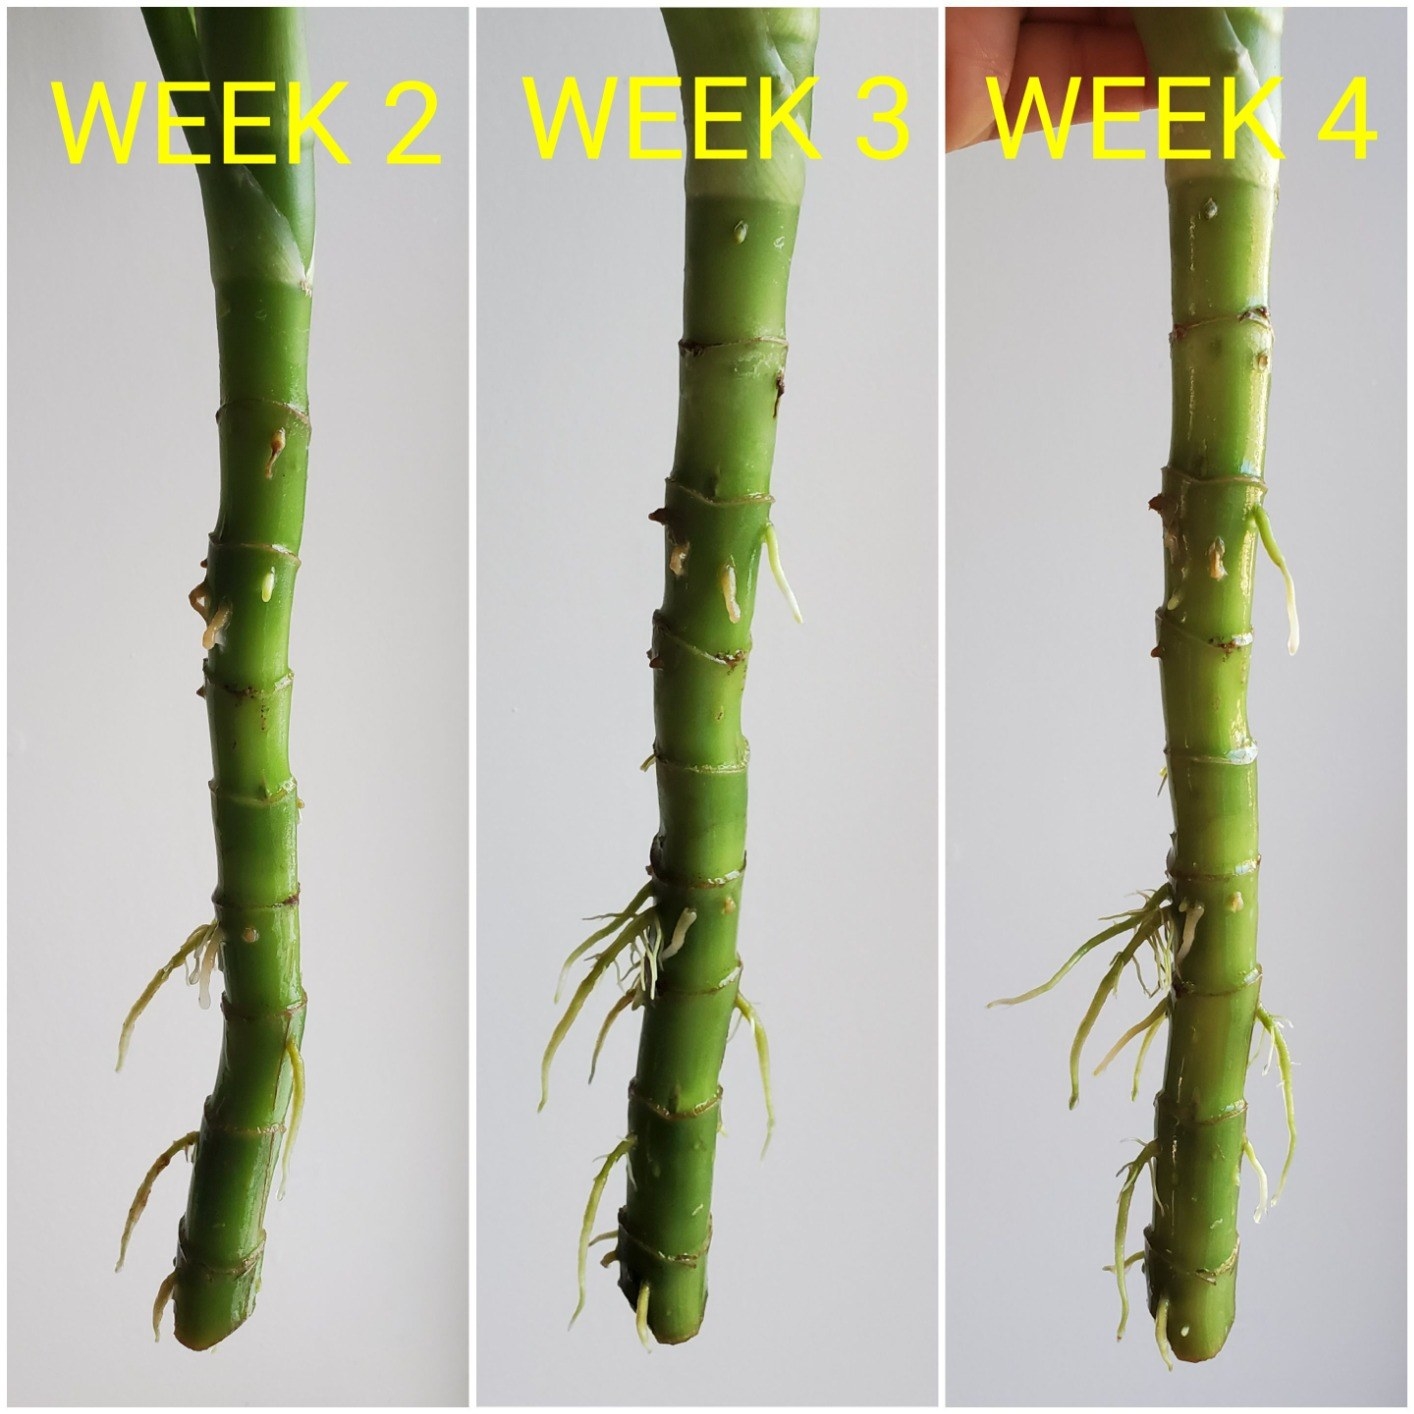 week 2: small roots week 3: slightly longer roots week 4: even longer roots